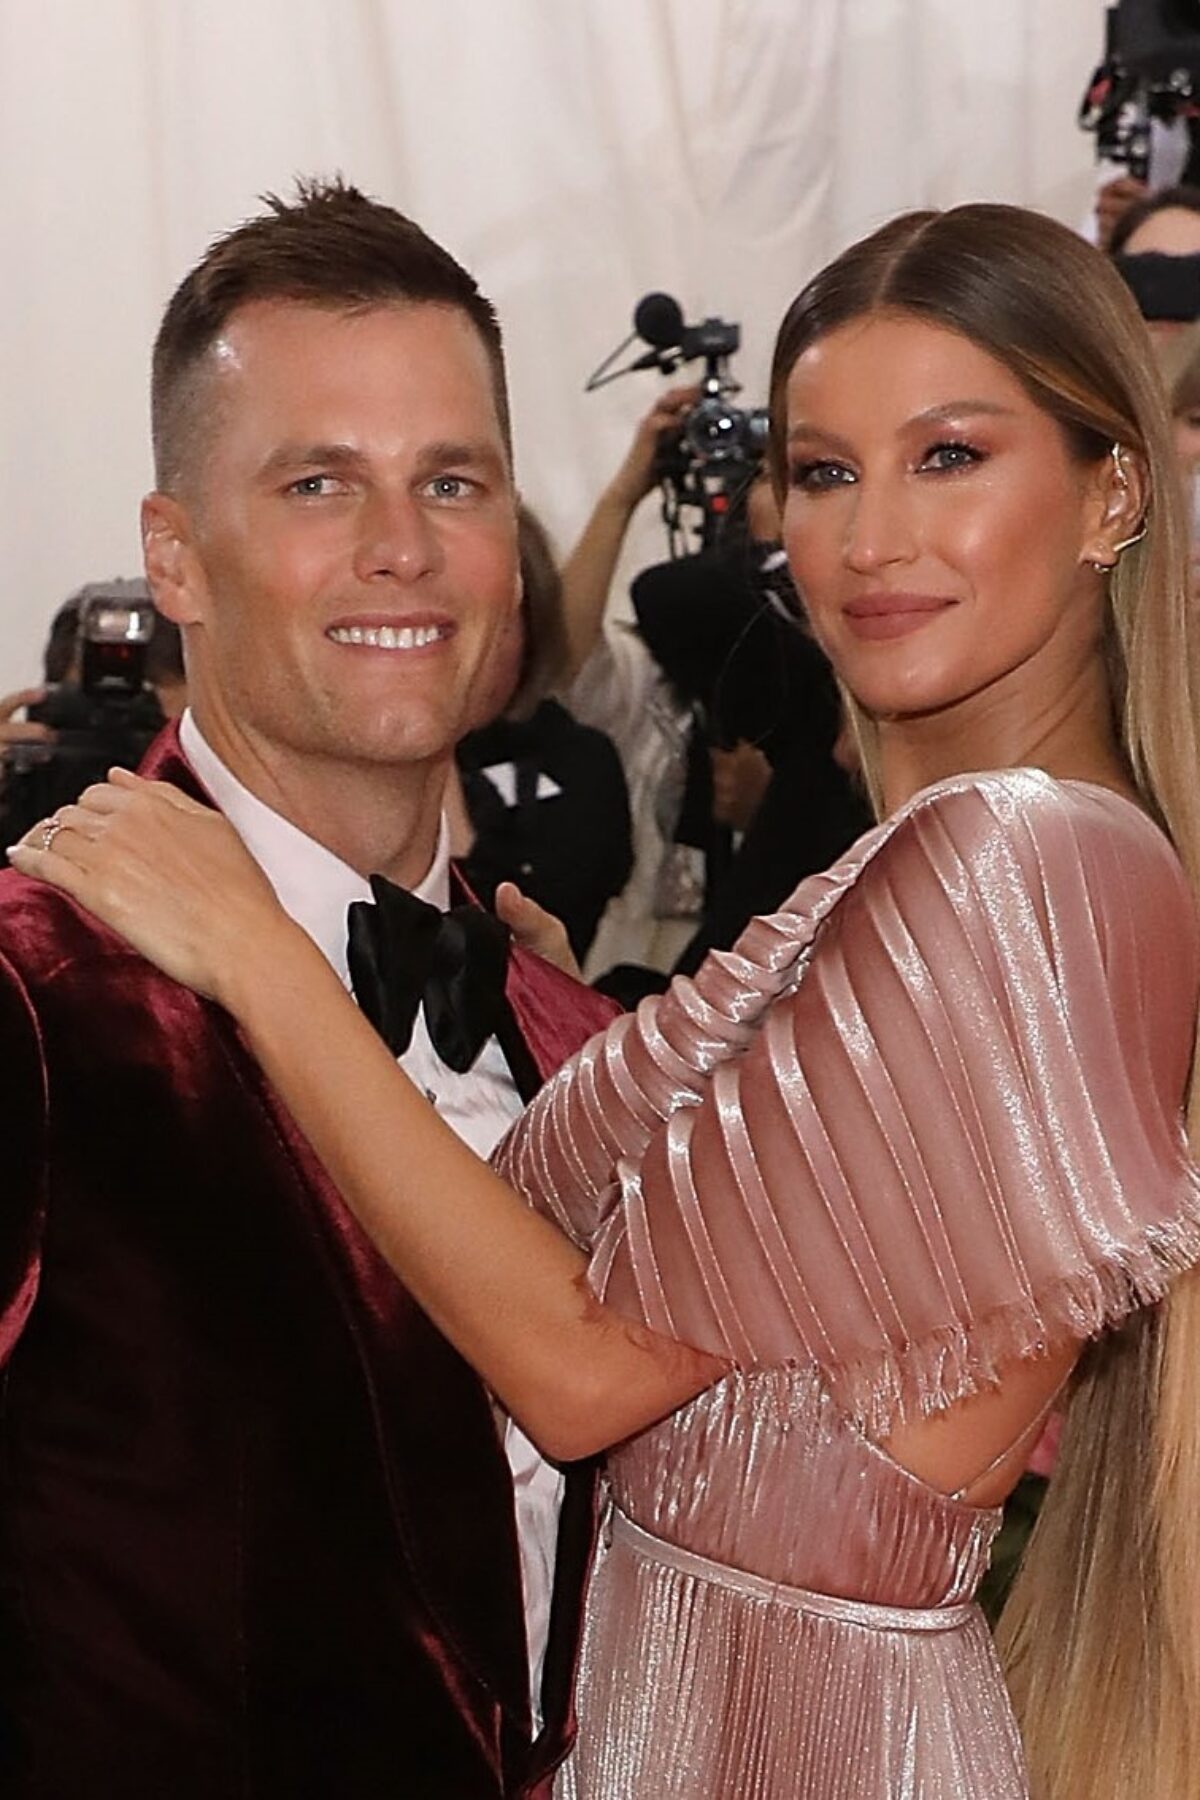 NEW YORK, NY - MAY 06: Gisele Bundchen and Tom Brady attend the 2019 Met Gala celebrating 